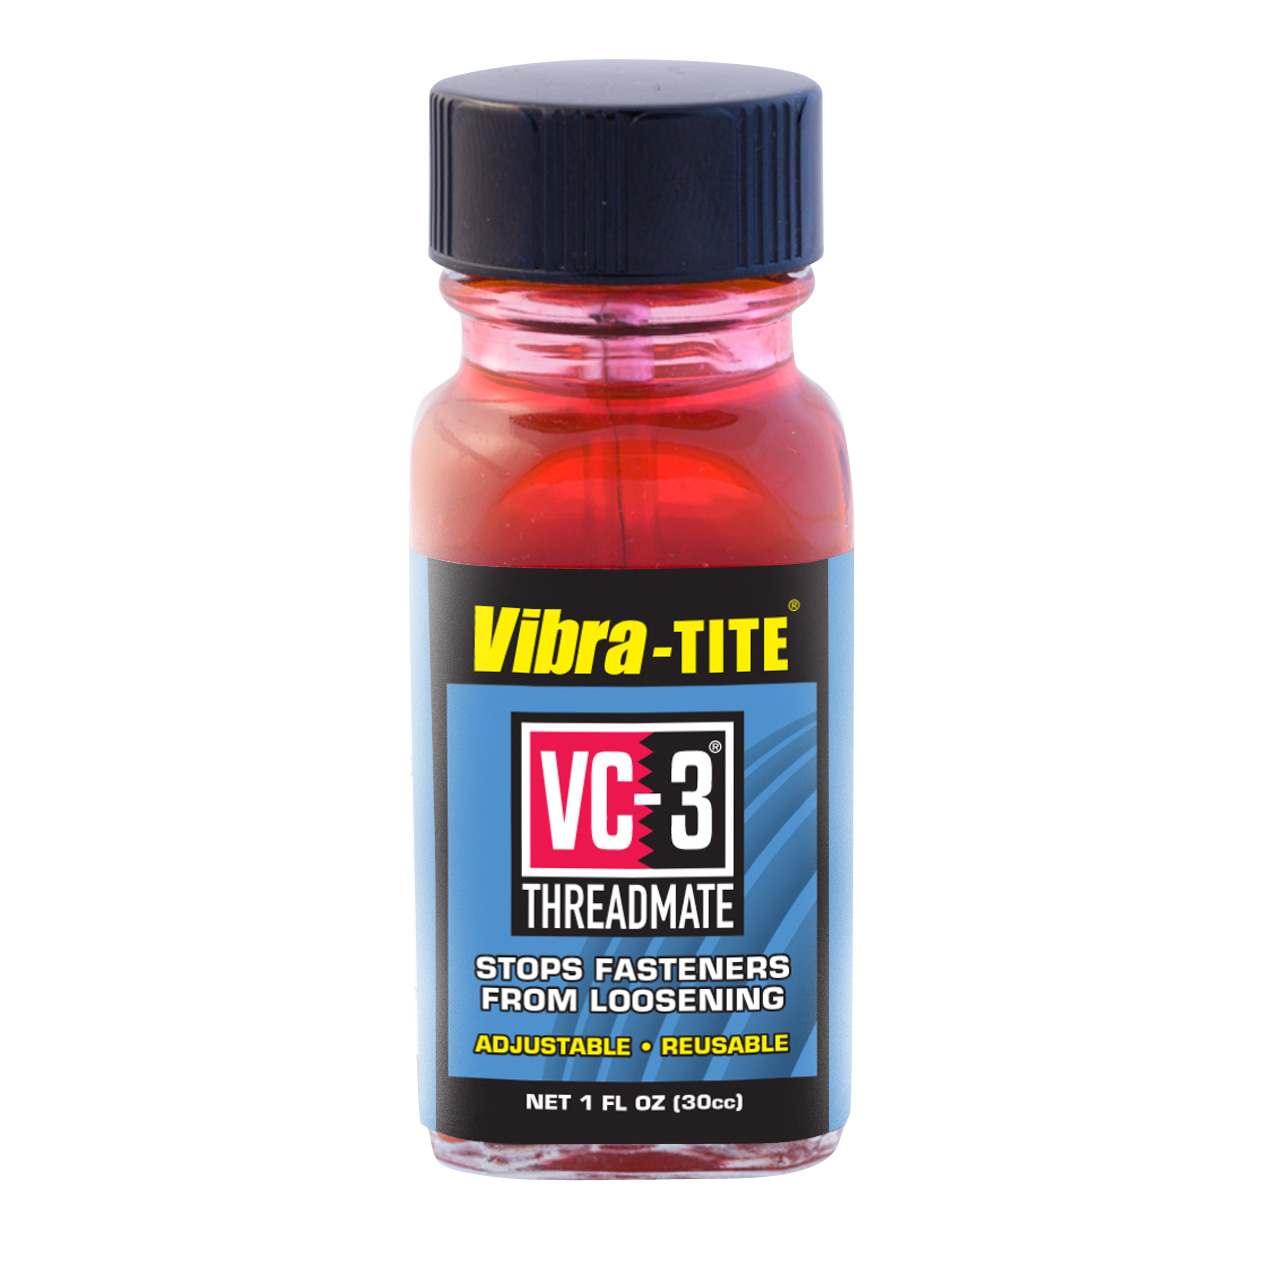 Vibra-Tite VC